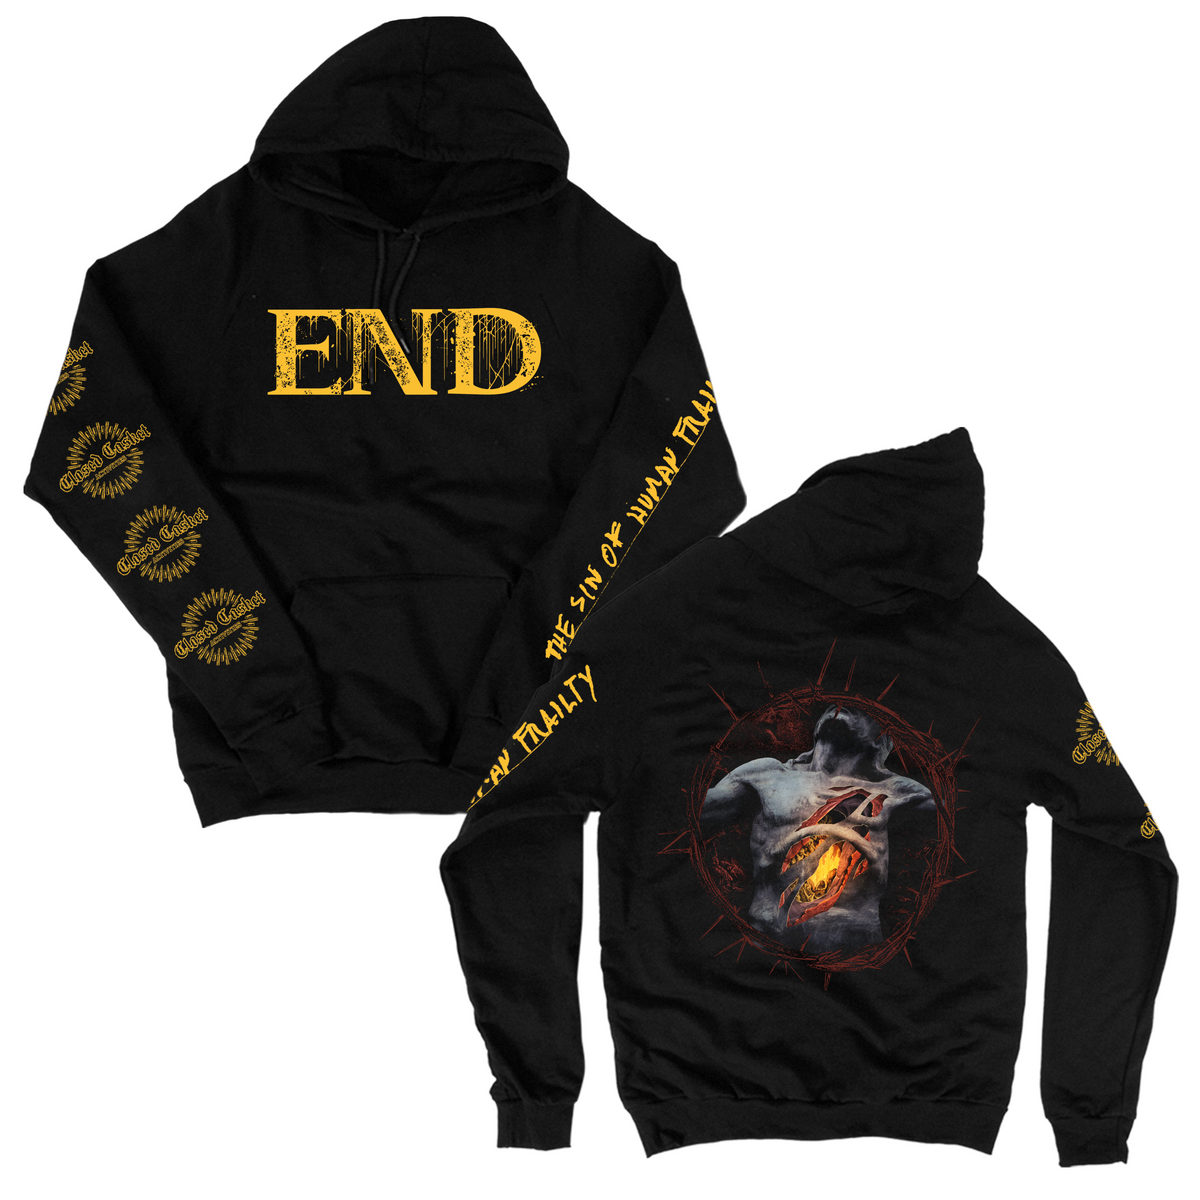 END - The Sin of Human Frailty Sweatshirt